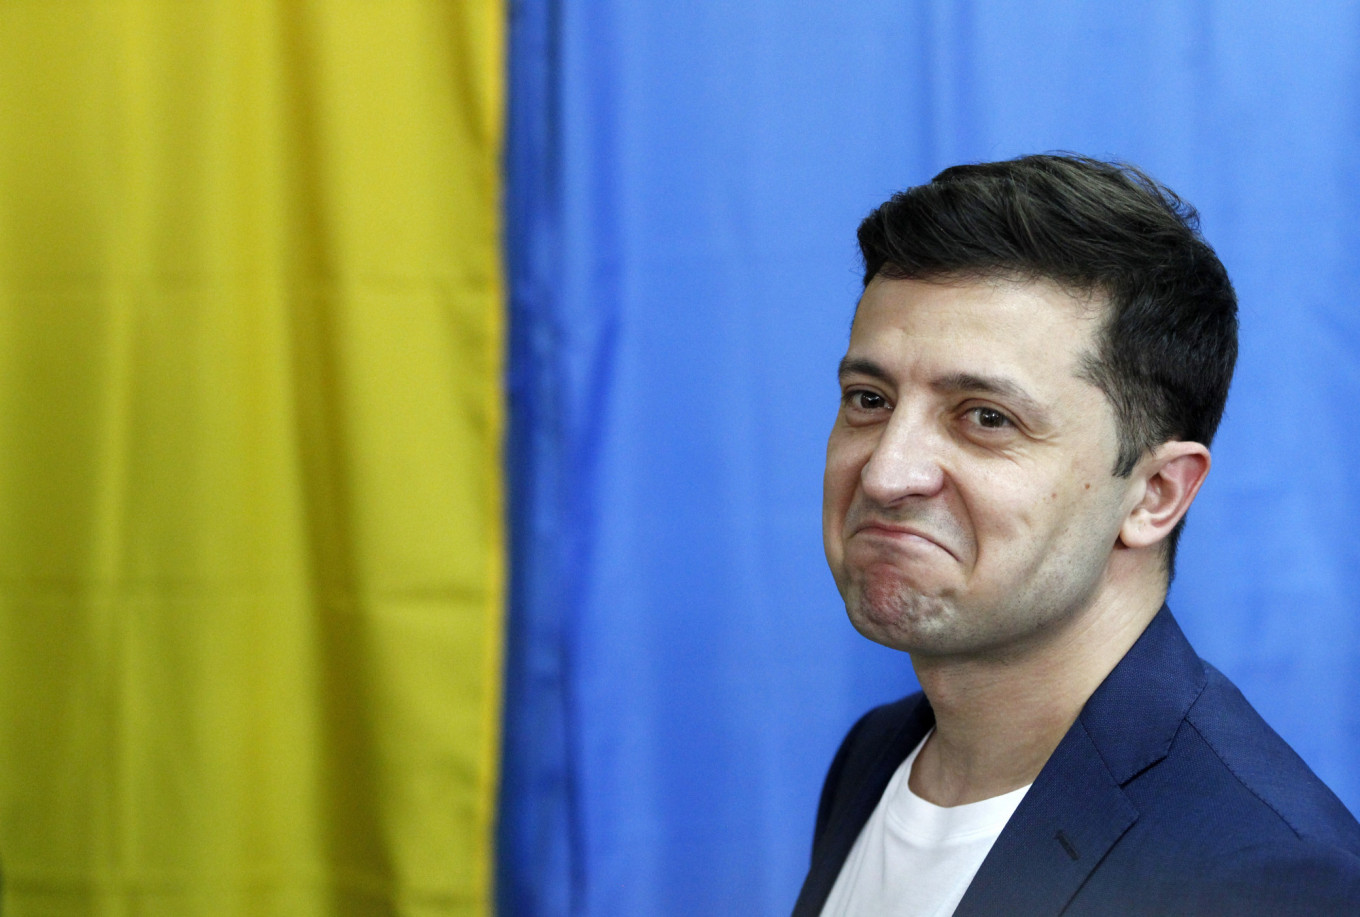 Ukrainian TV Comic Zelenskiy Wins Presidency in Landslide, Exit Poll Shows